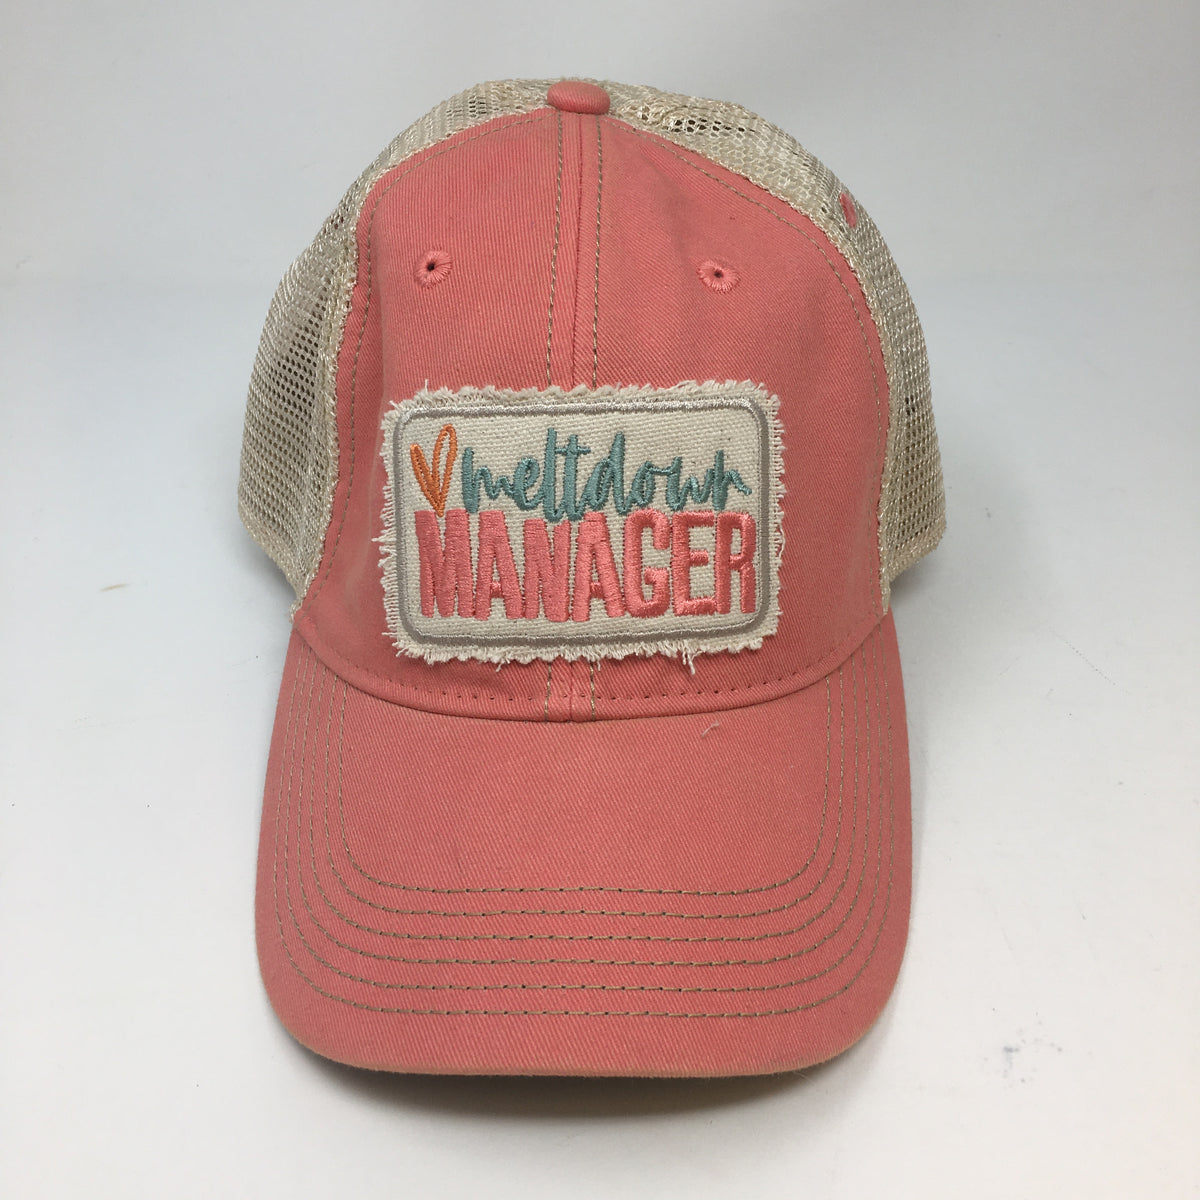 Meltdown Manager Hat